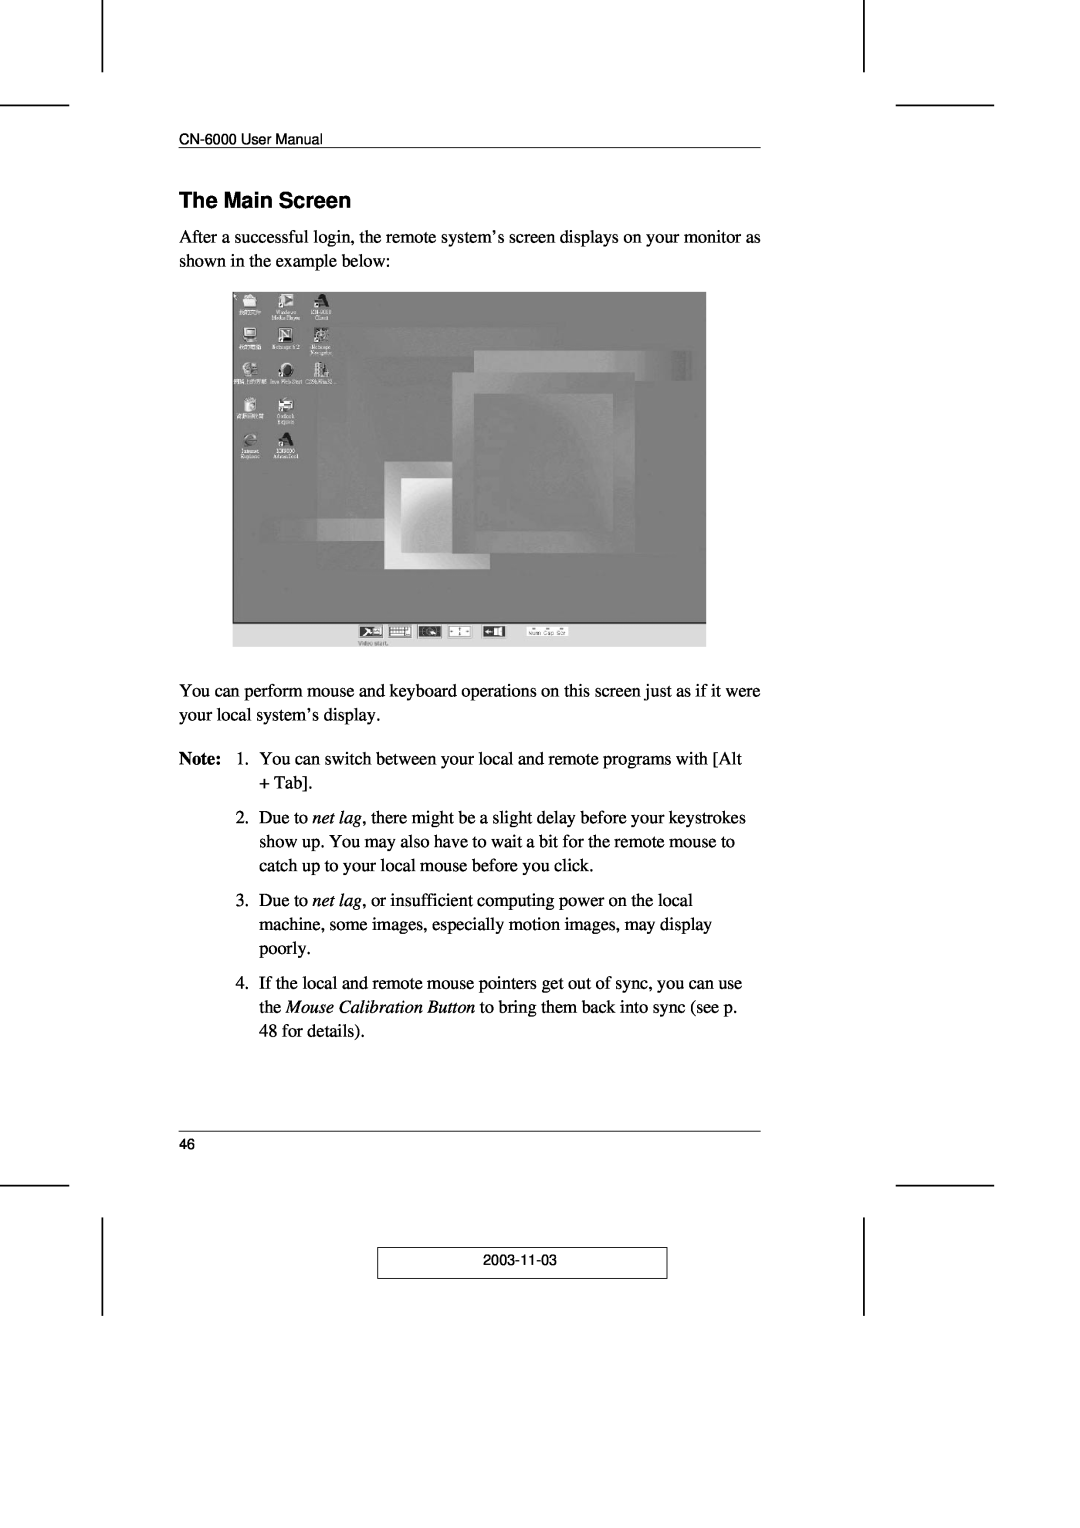 ATEN Technology CN-6000 user manual The Main Screen 